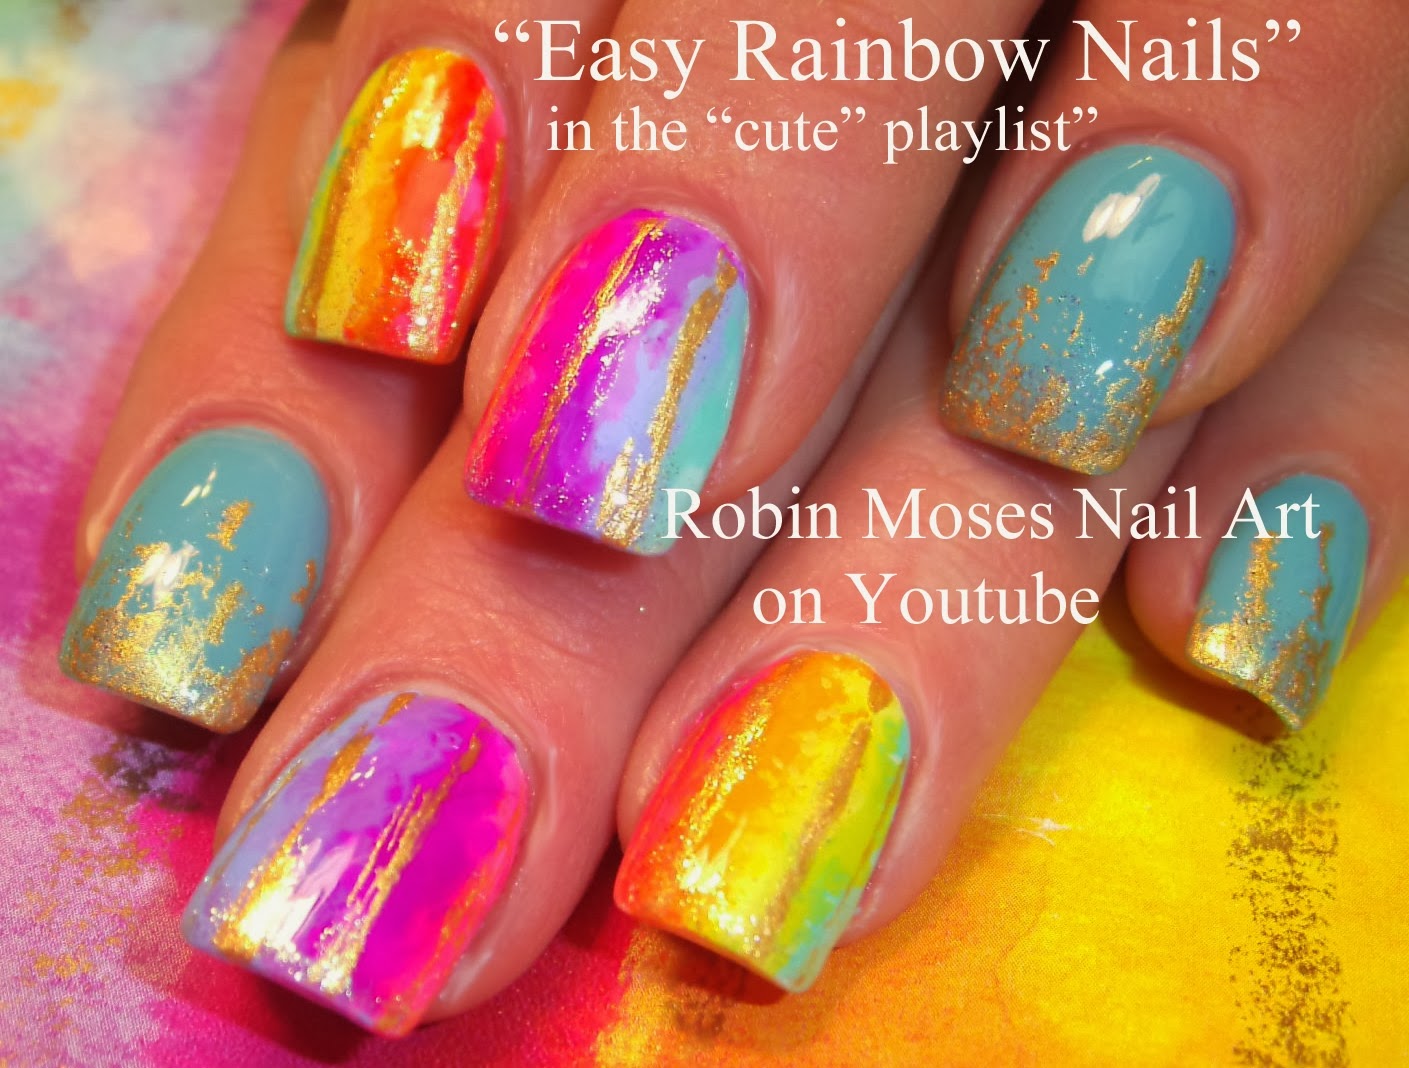 2. Easy Rainbow Nail Art with Sponge - wide 2